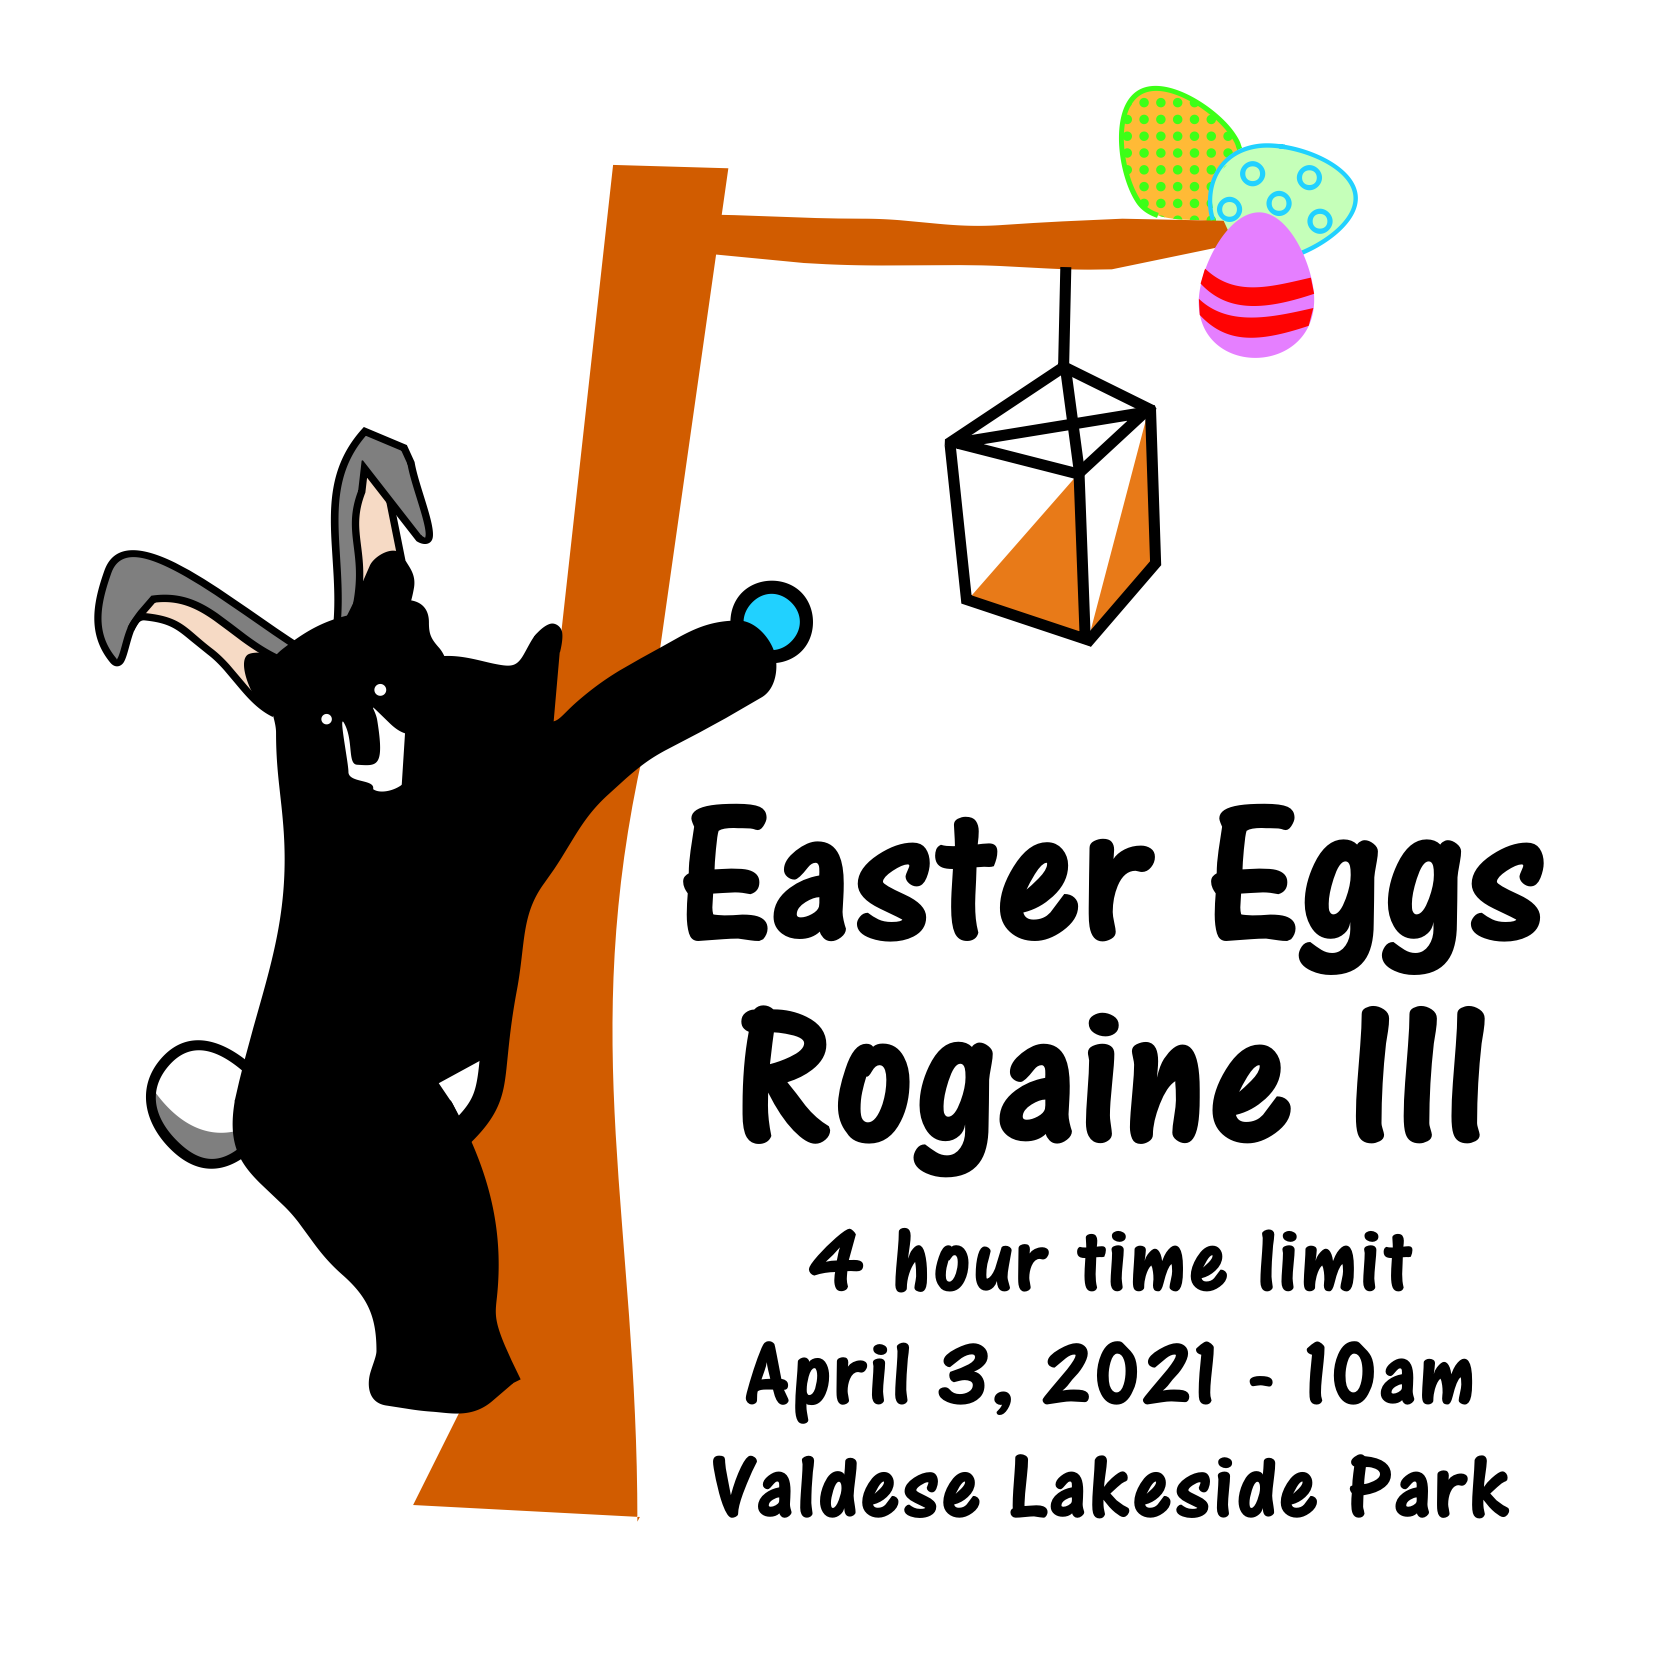 Easter Eggs Rogaine III logo